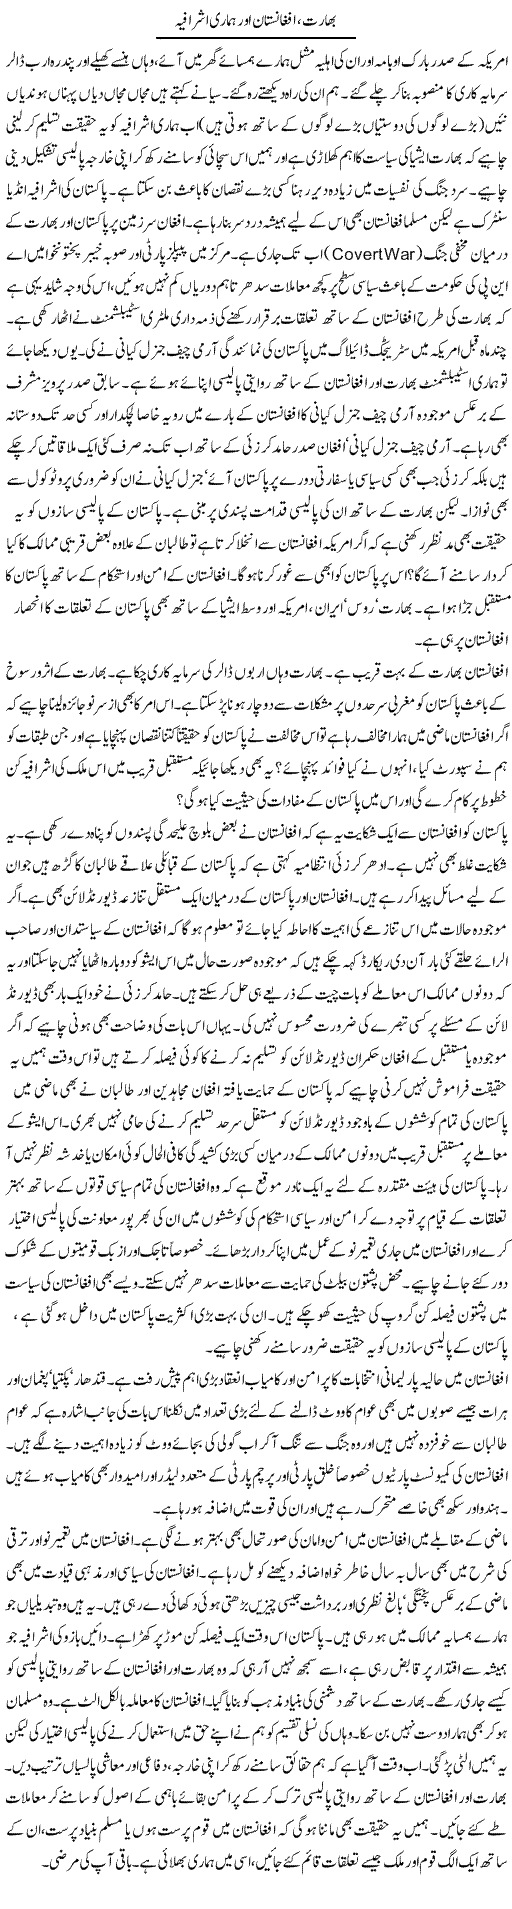 India Afghanistan Express Column Latif Ch 10 November 2010